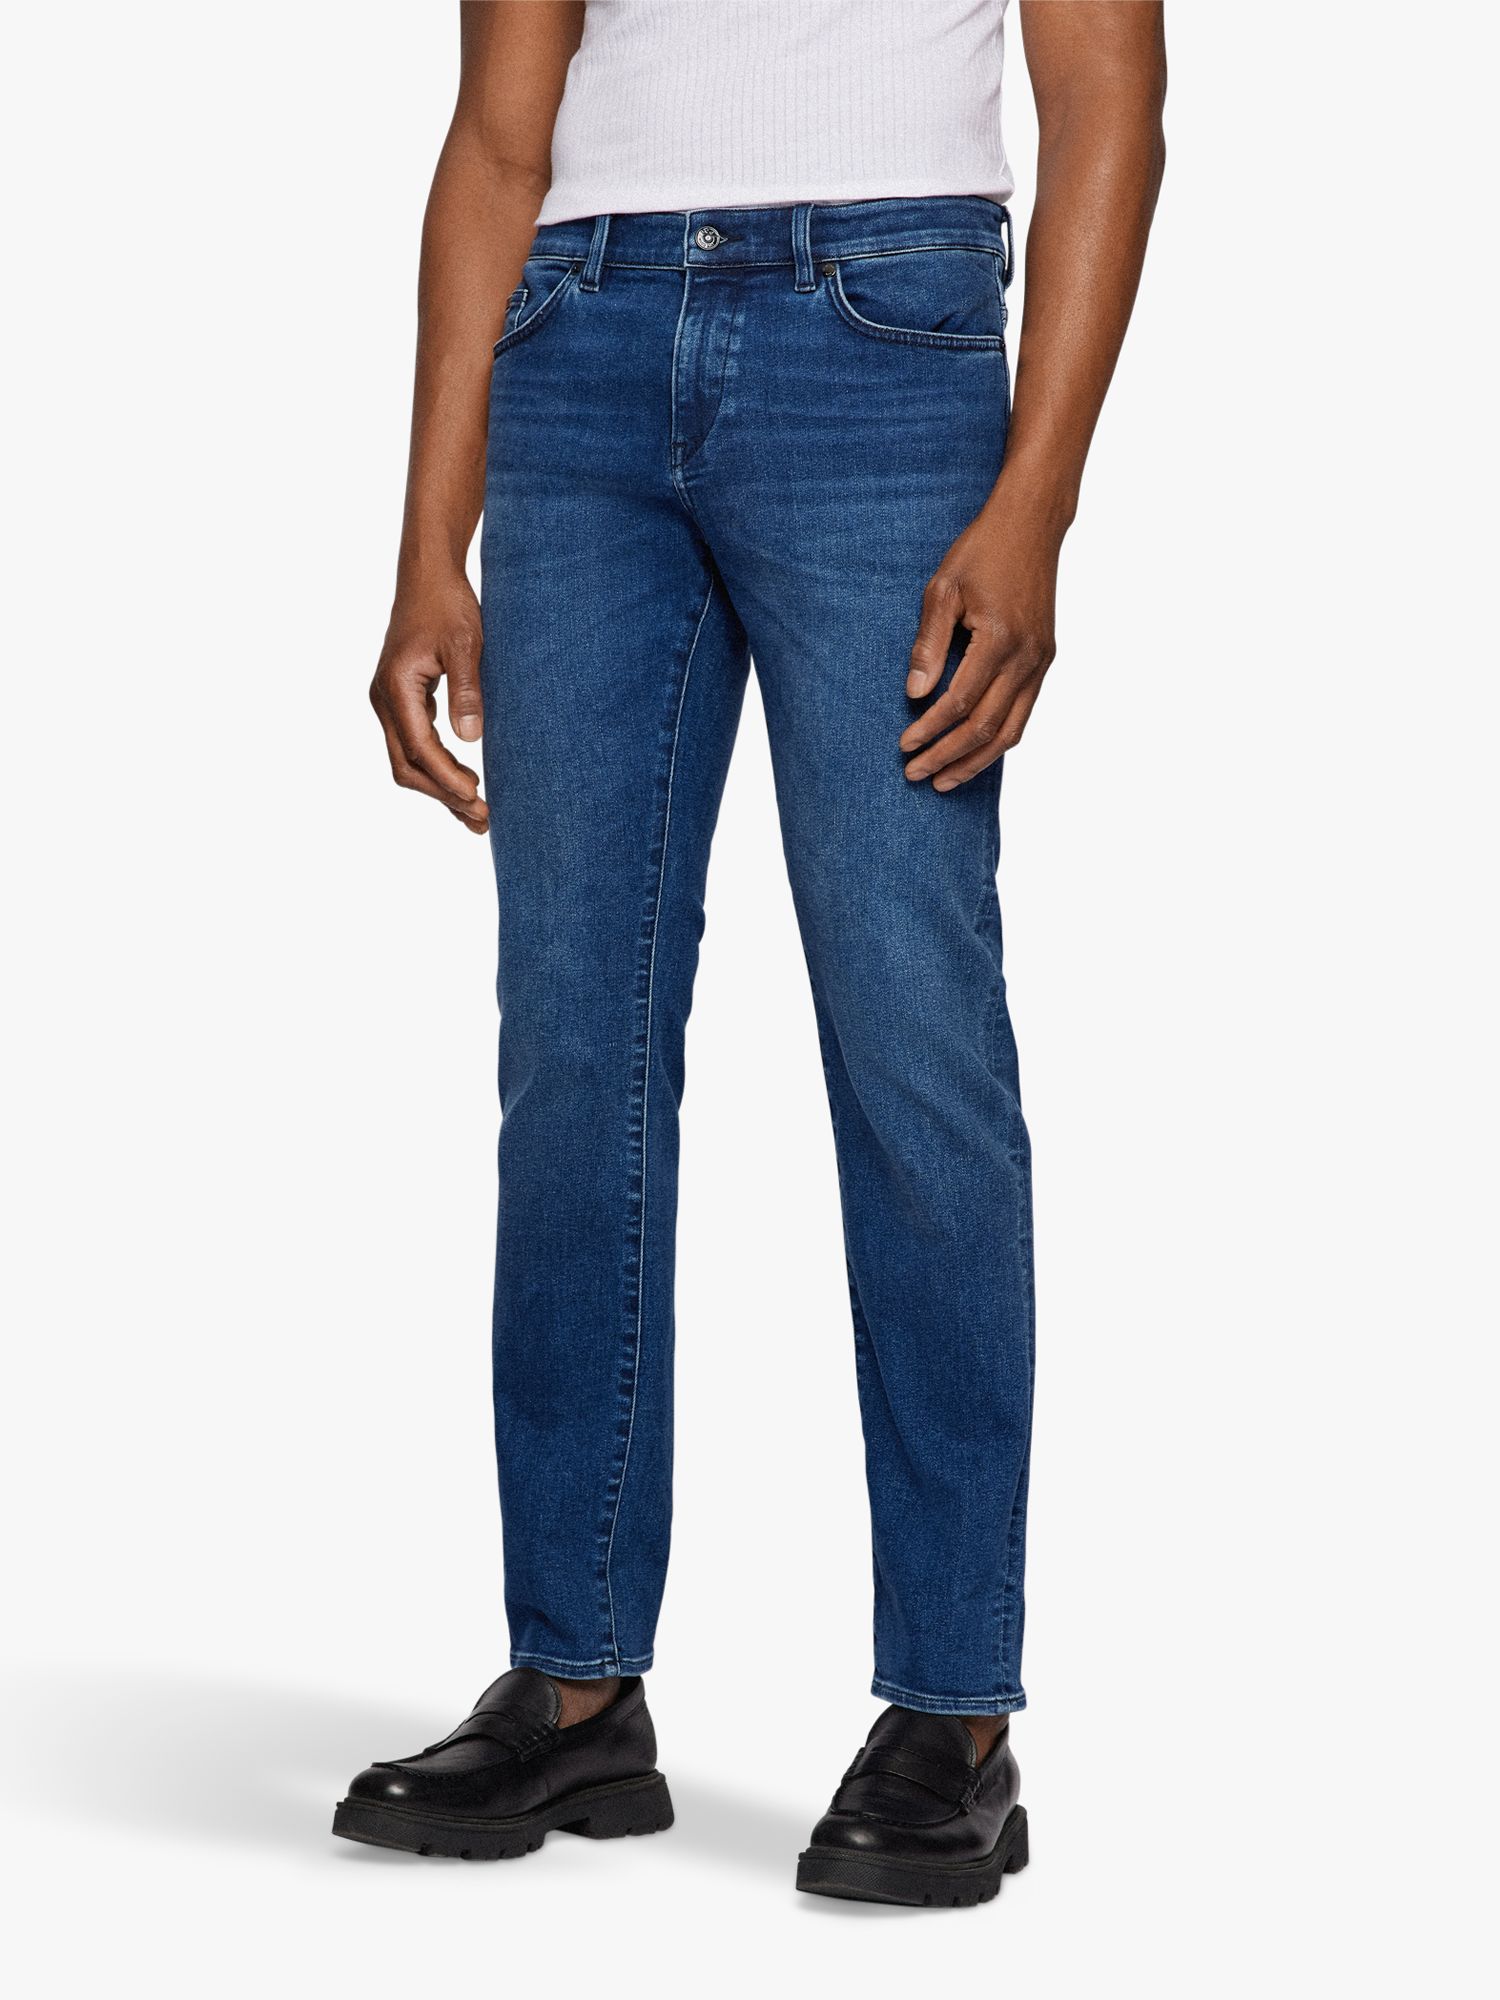 HUGO BOSS Delaware Slim Fit Jeans, Navy Blue 30L male 99% cotton, 1% elastane